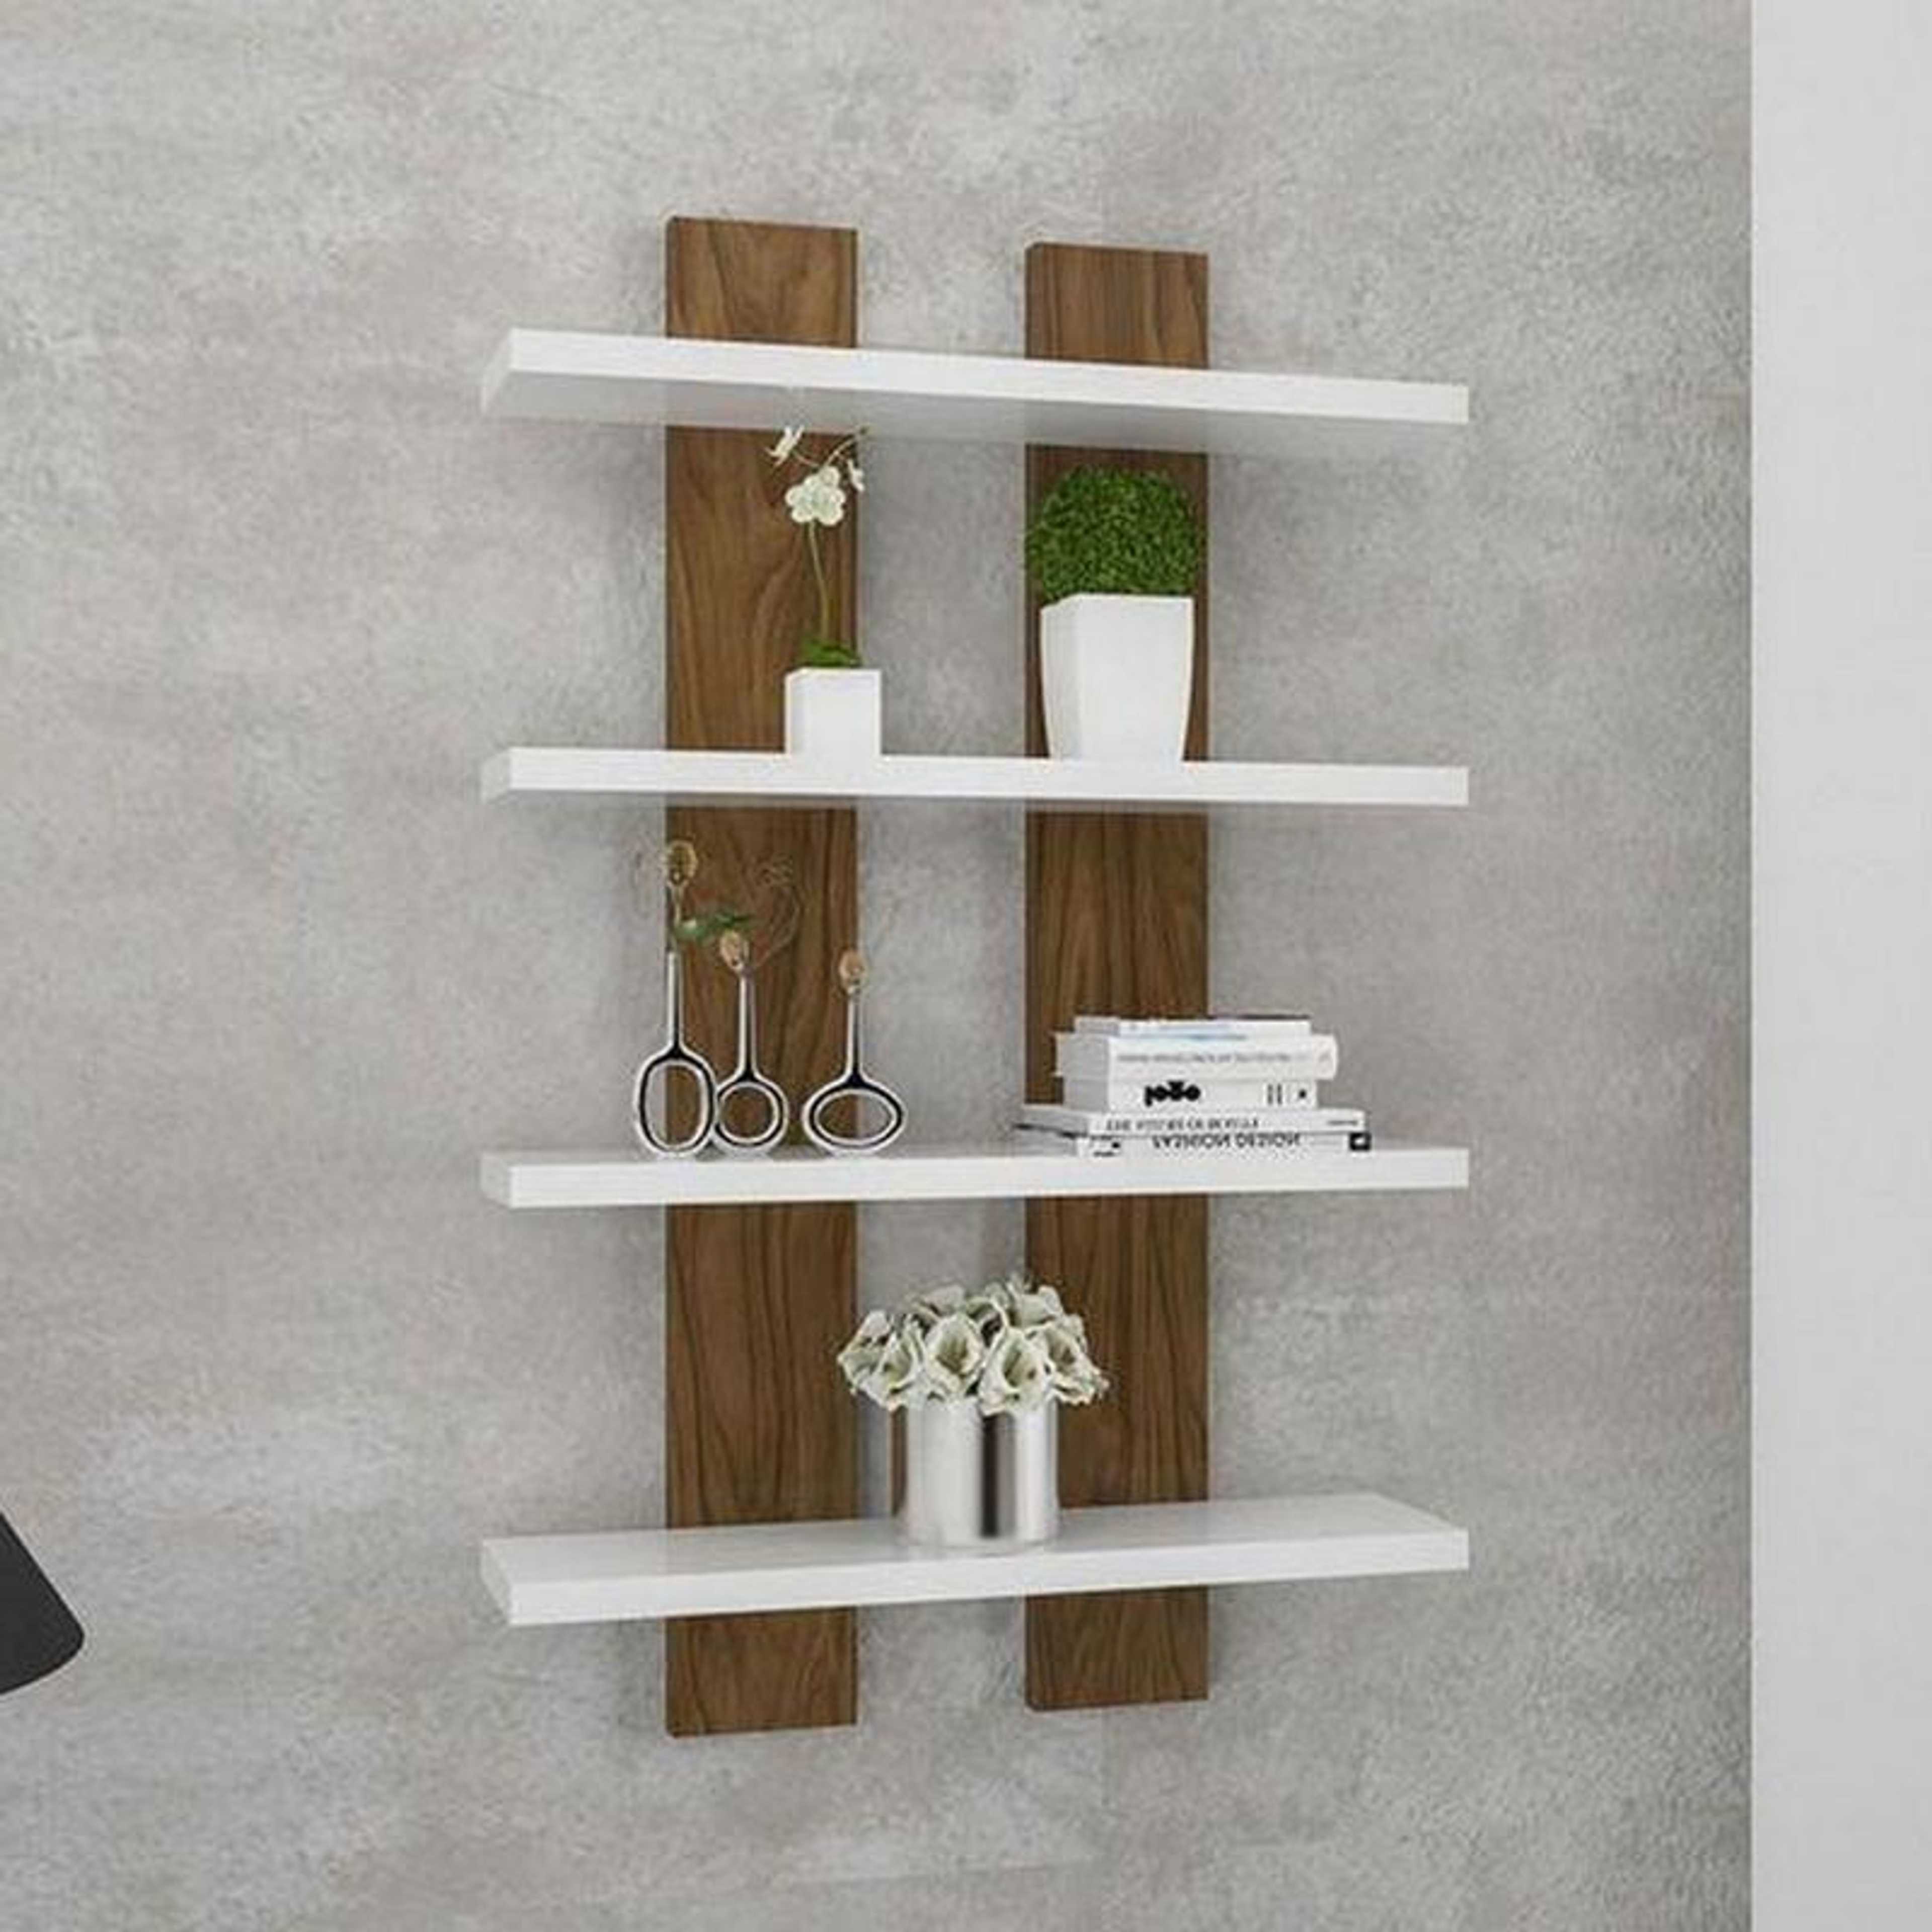 Toheed wood floating shelves hanging shelves